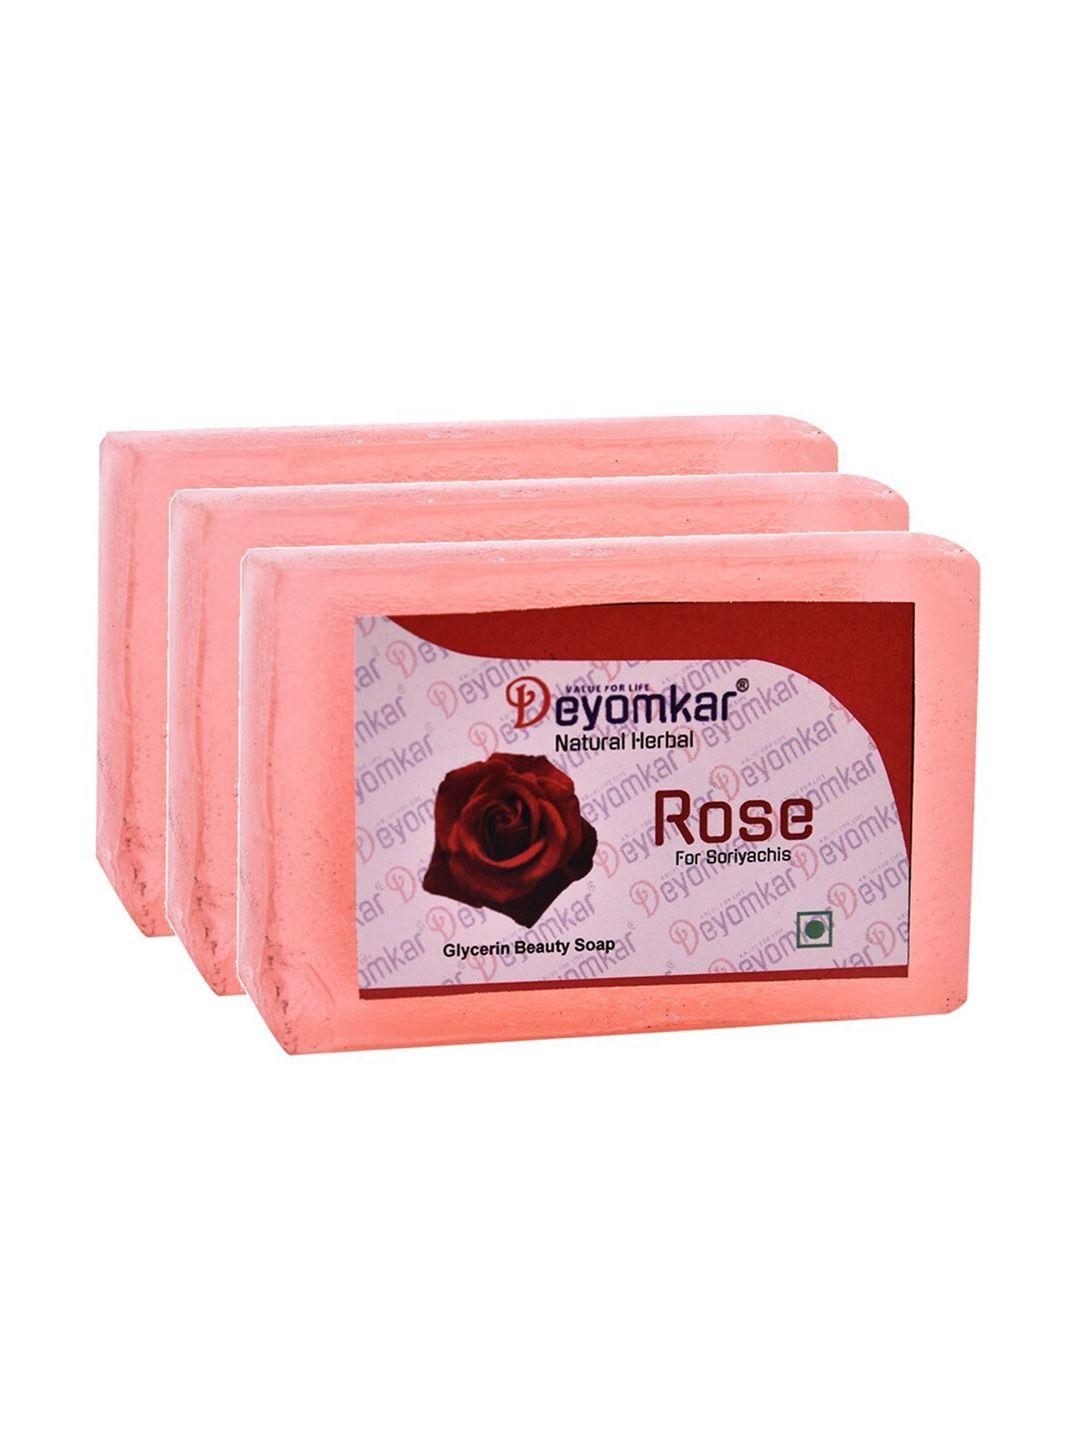 deyomkar set of 3 natural herbal glycerin rose soap